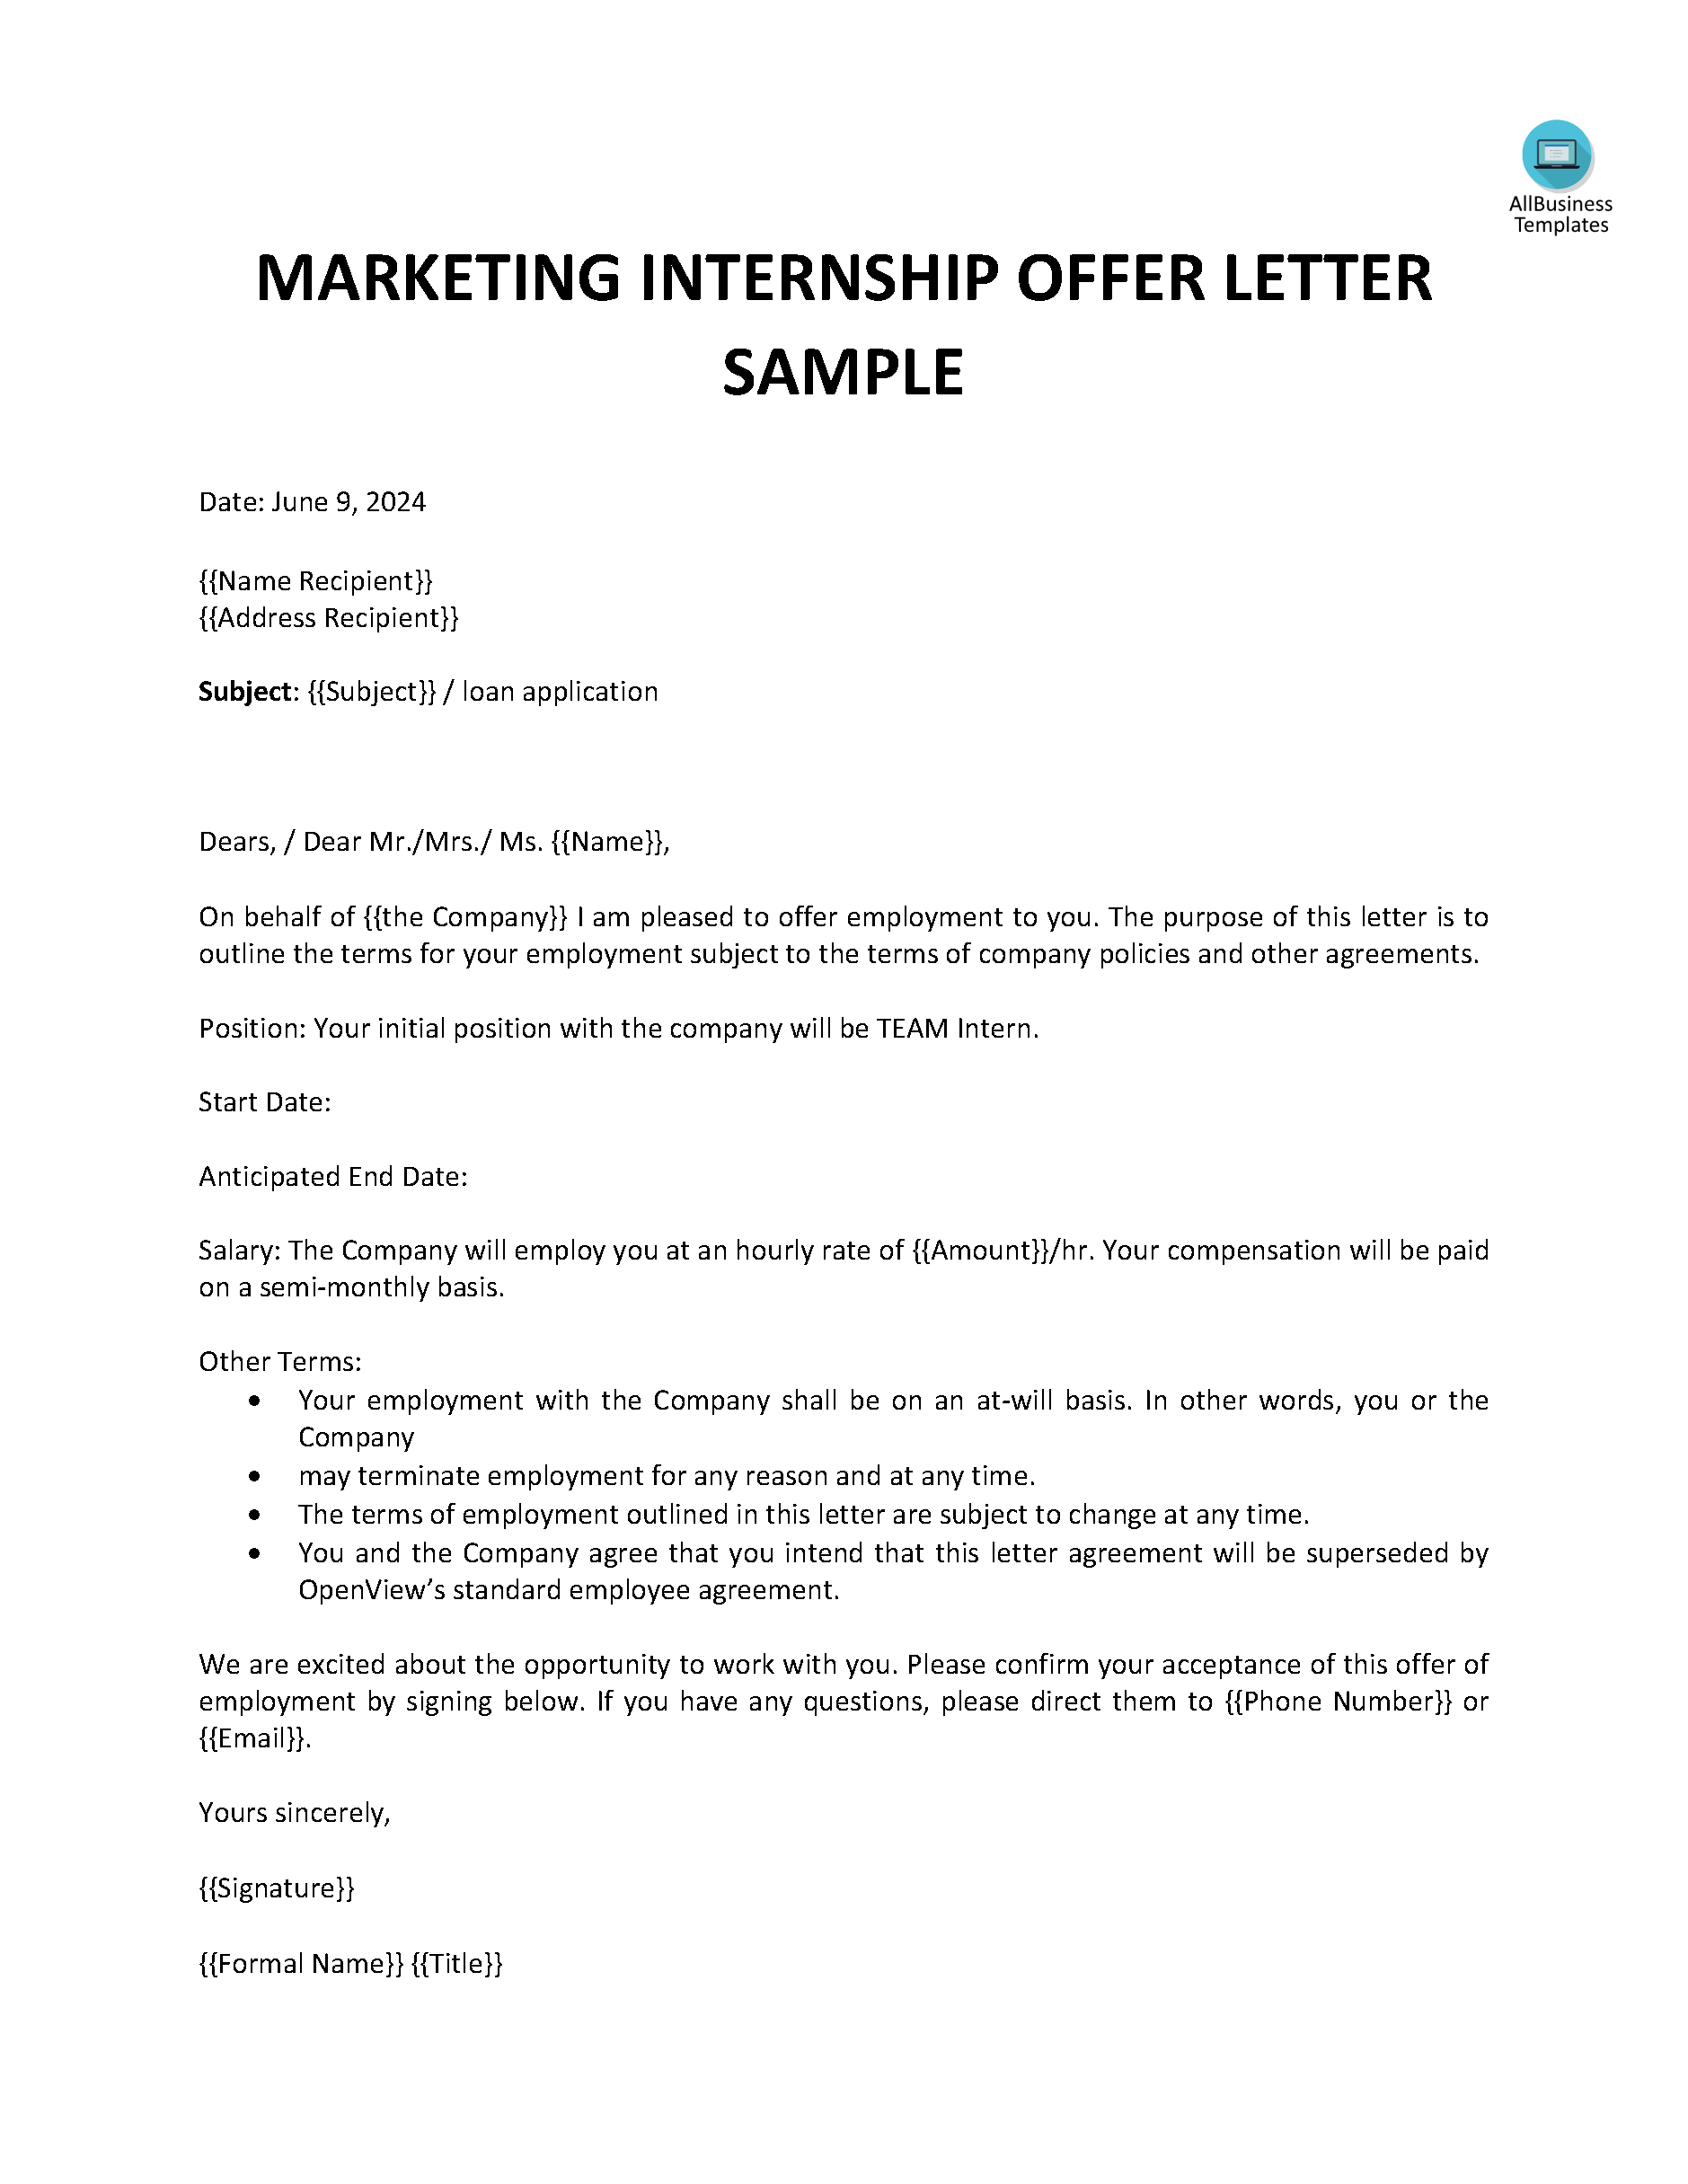 Sample Internship Offer Letter The Document Template